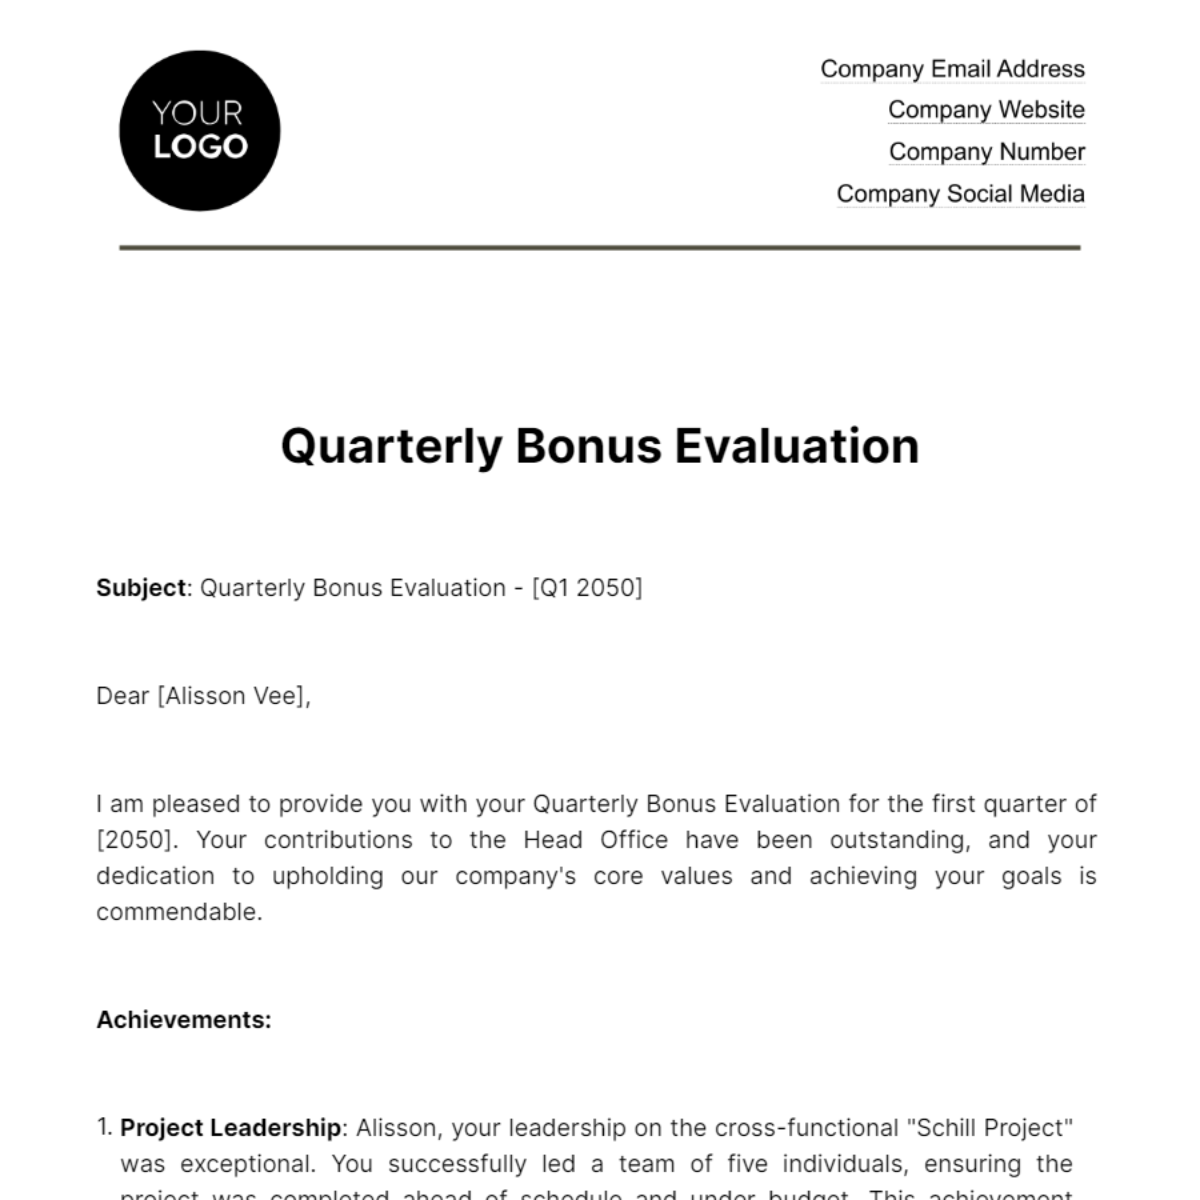 Quarterly Bonus Evaluation HR Template